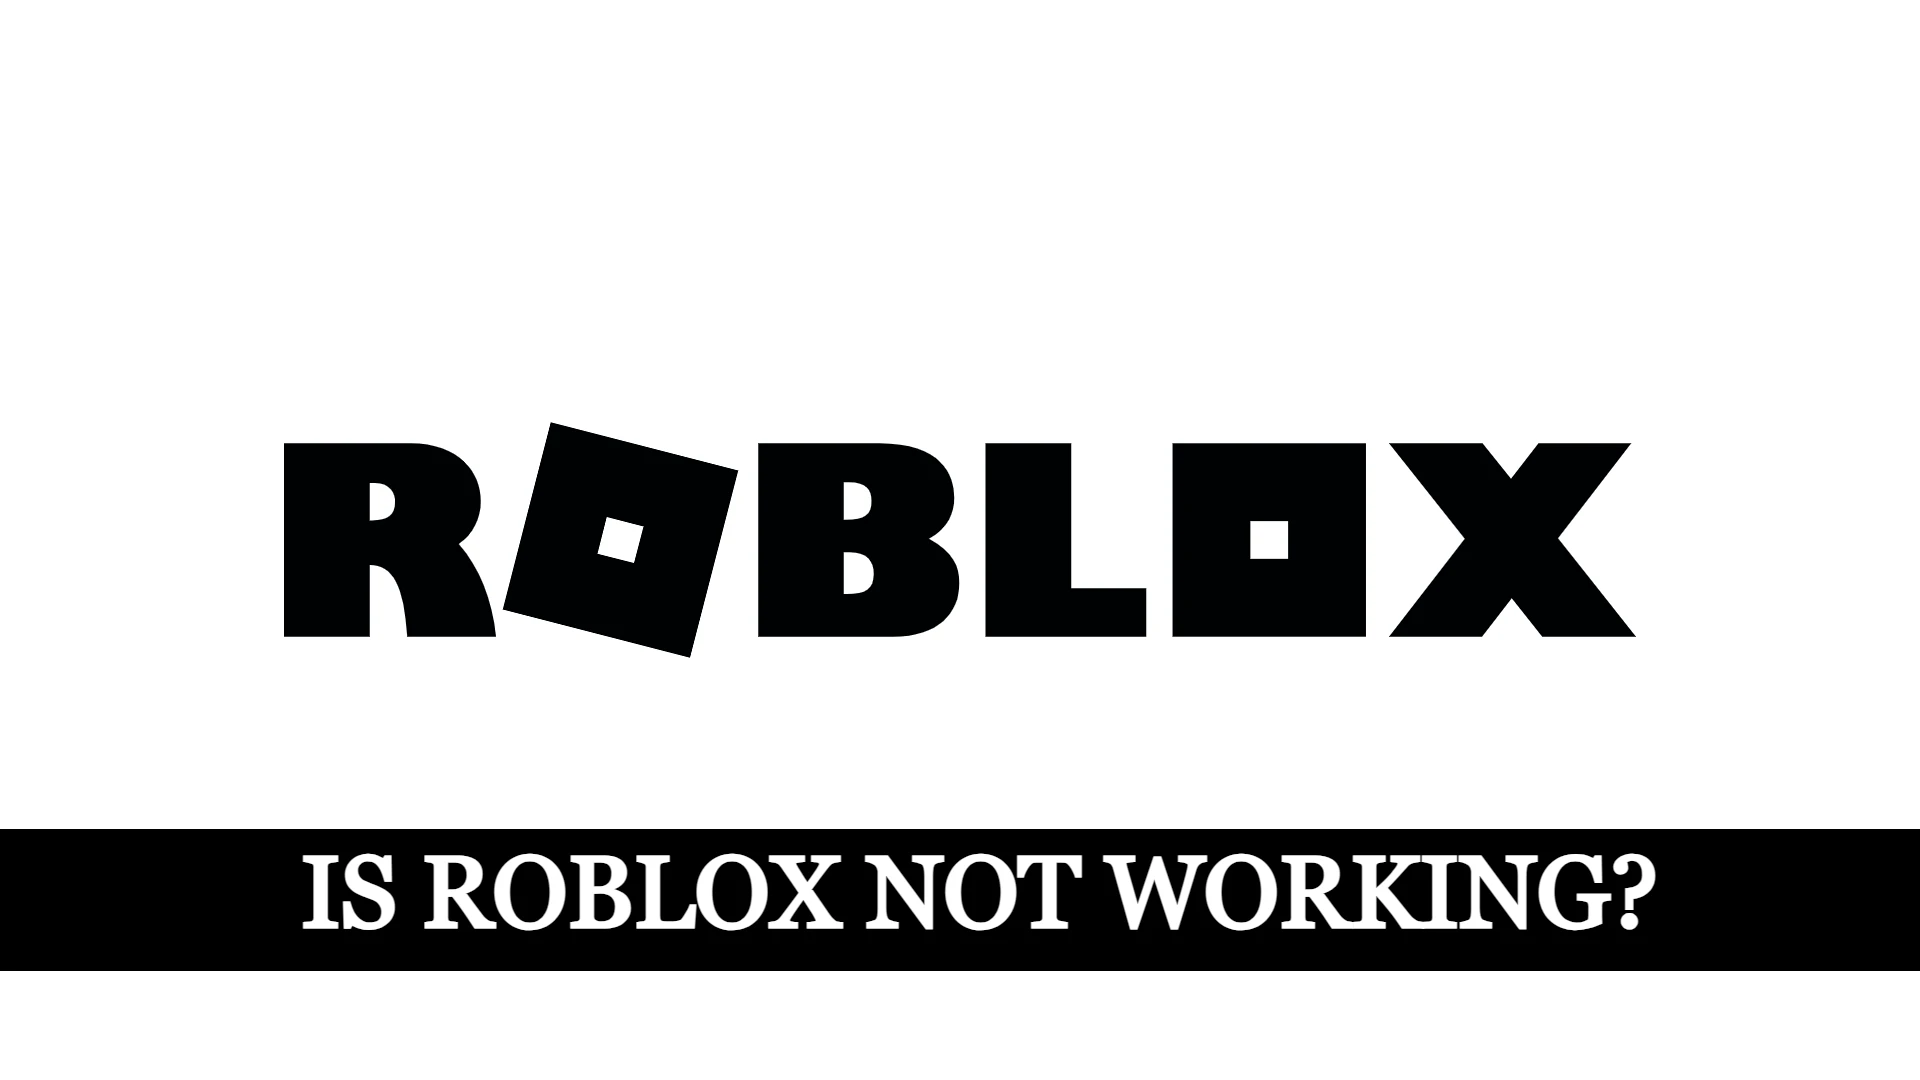 Fix Roblox not working